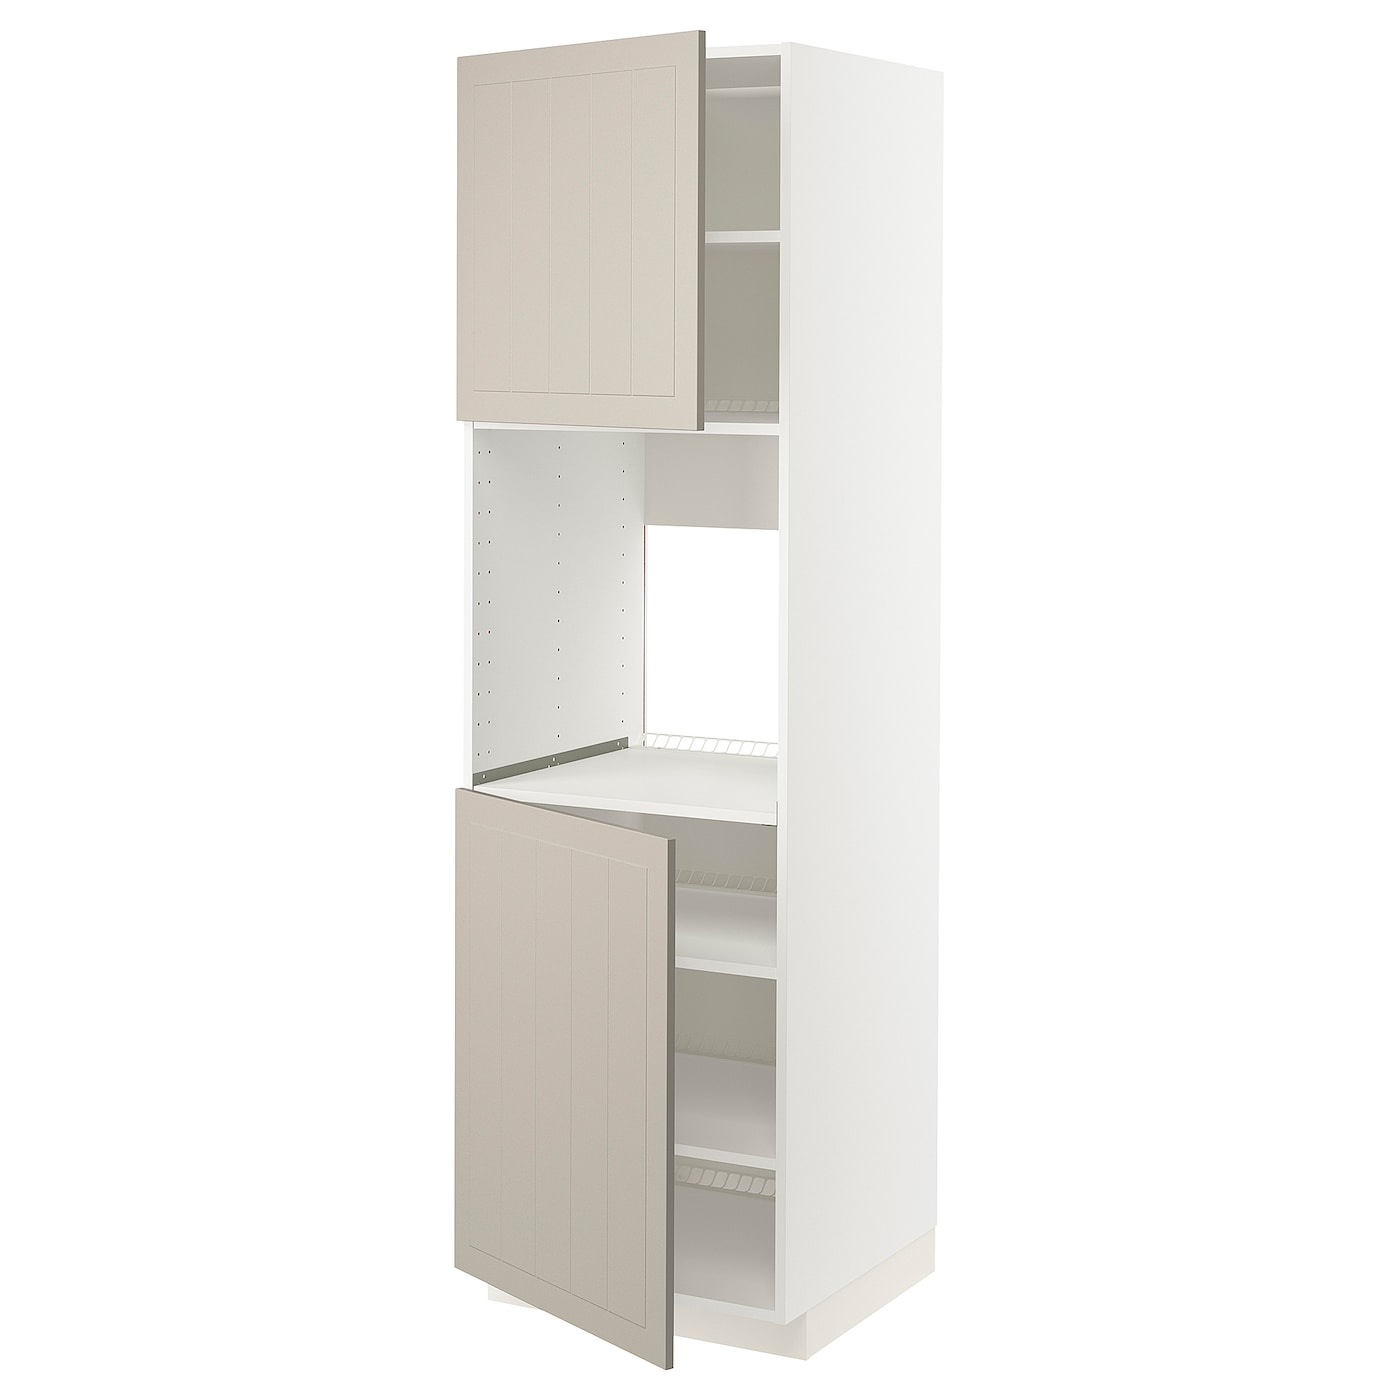 Высокий кухонный шкаф с полками - IKEA METOD/МЕТОД ИКЕА, 200х60х60 см, белый/бежевый